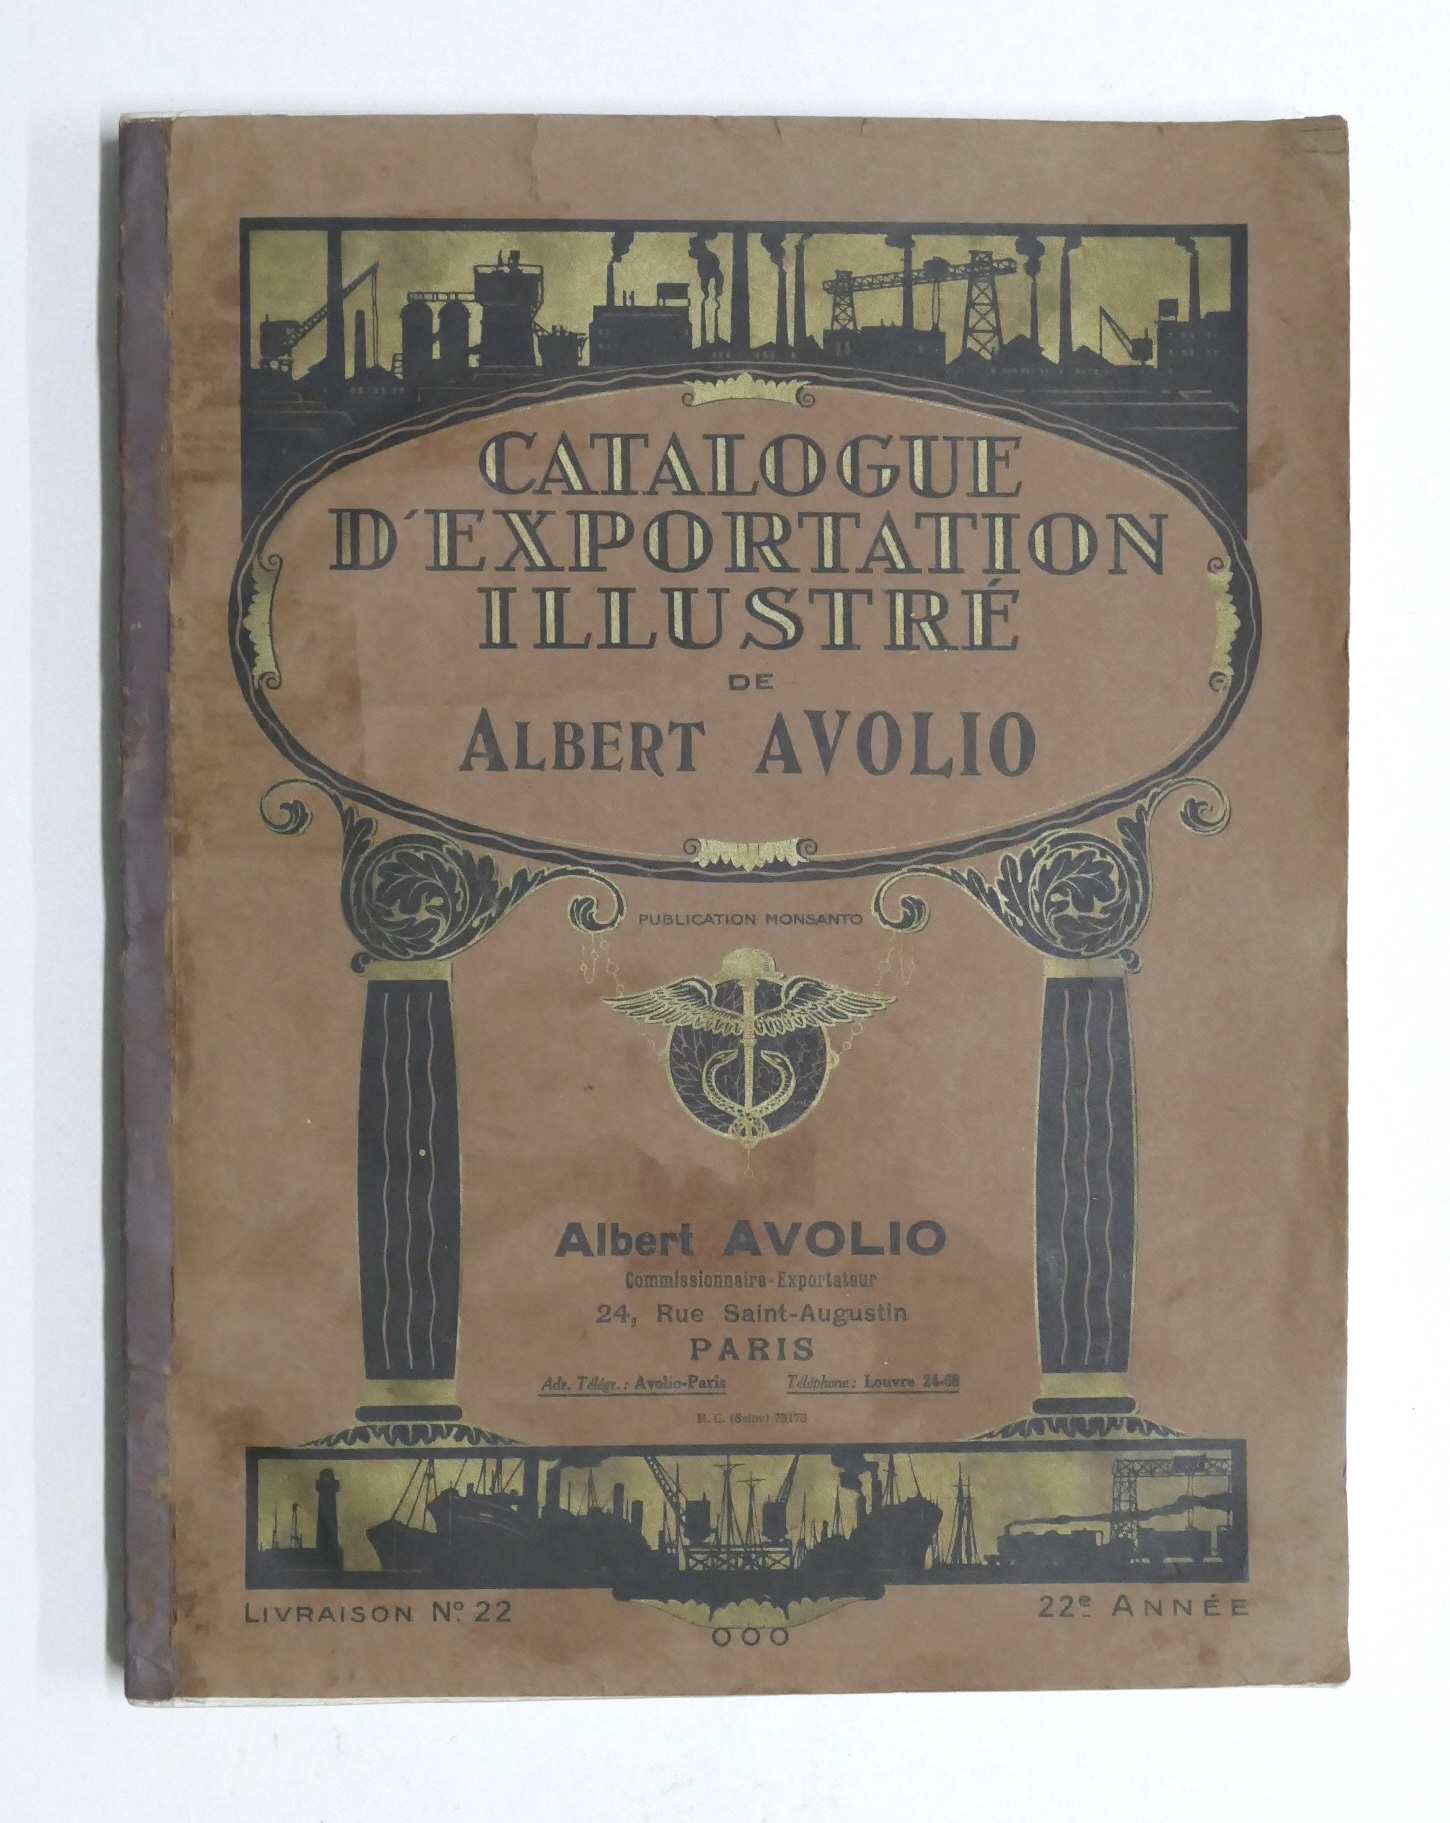 Catalogo - Catalogue de Exportation Illustrè de Albert Avolio - …